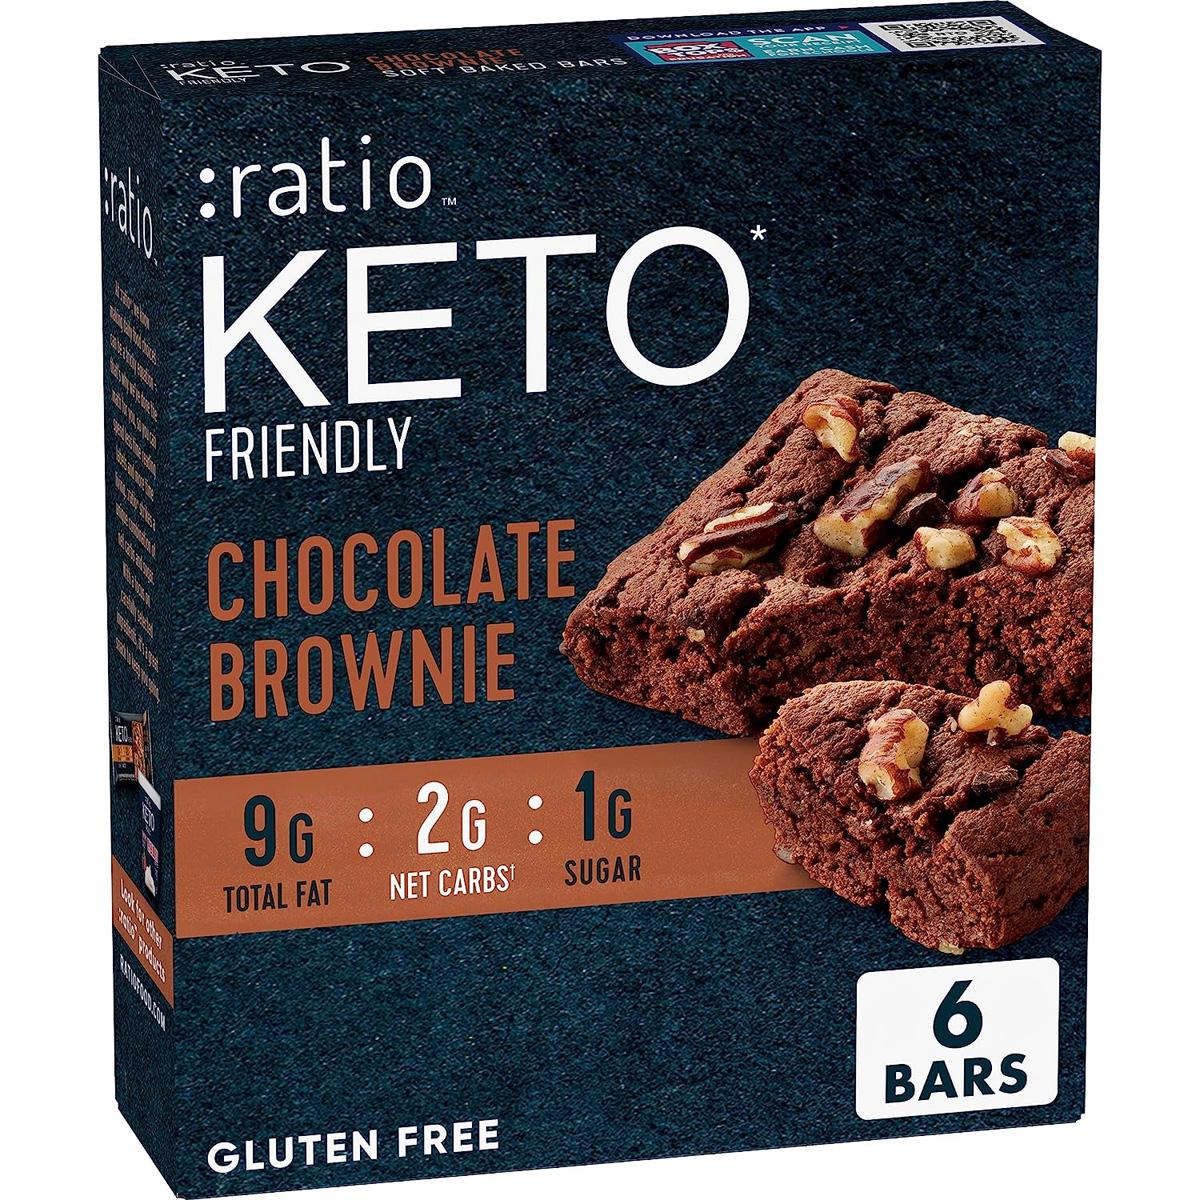 ratio Keto Friendly Soft Baked Bars 6 Pack for $4.89